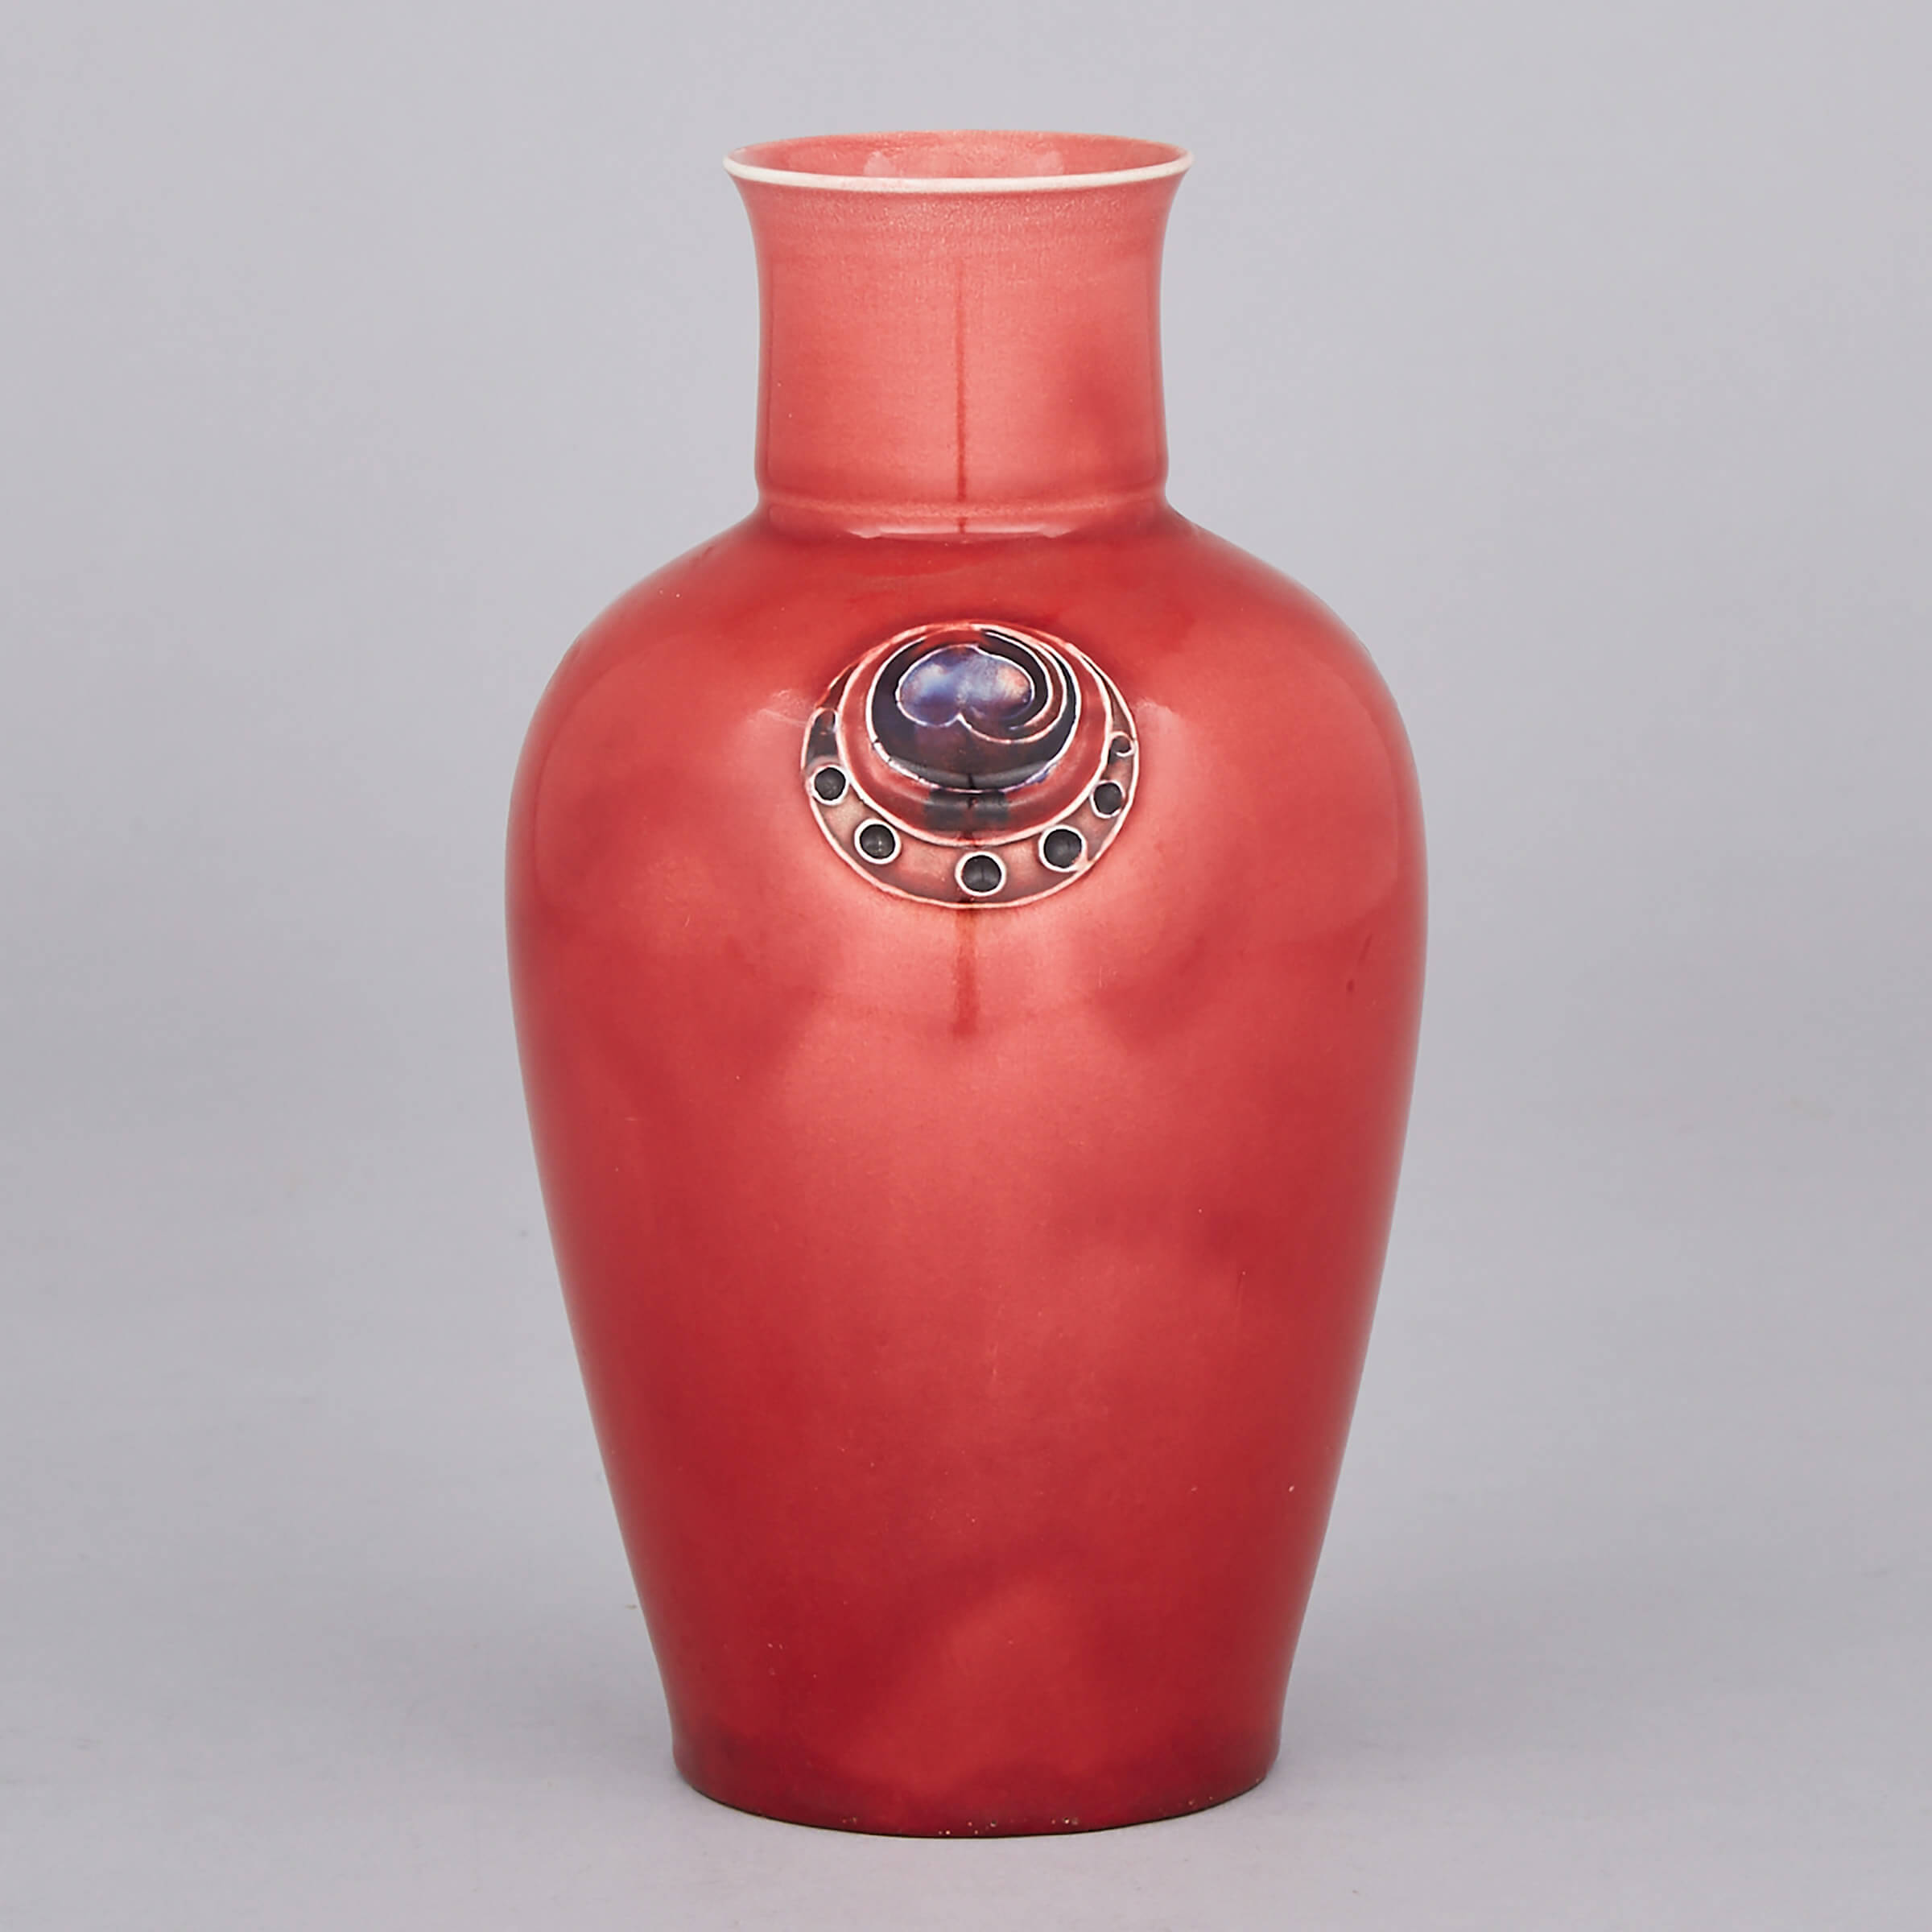 Macintyre Moorcroft Red Flamminian Vase, for Liberty & Co., c. 1906-13